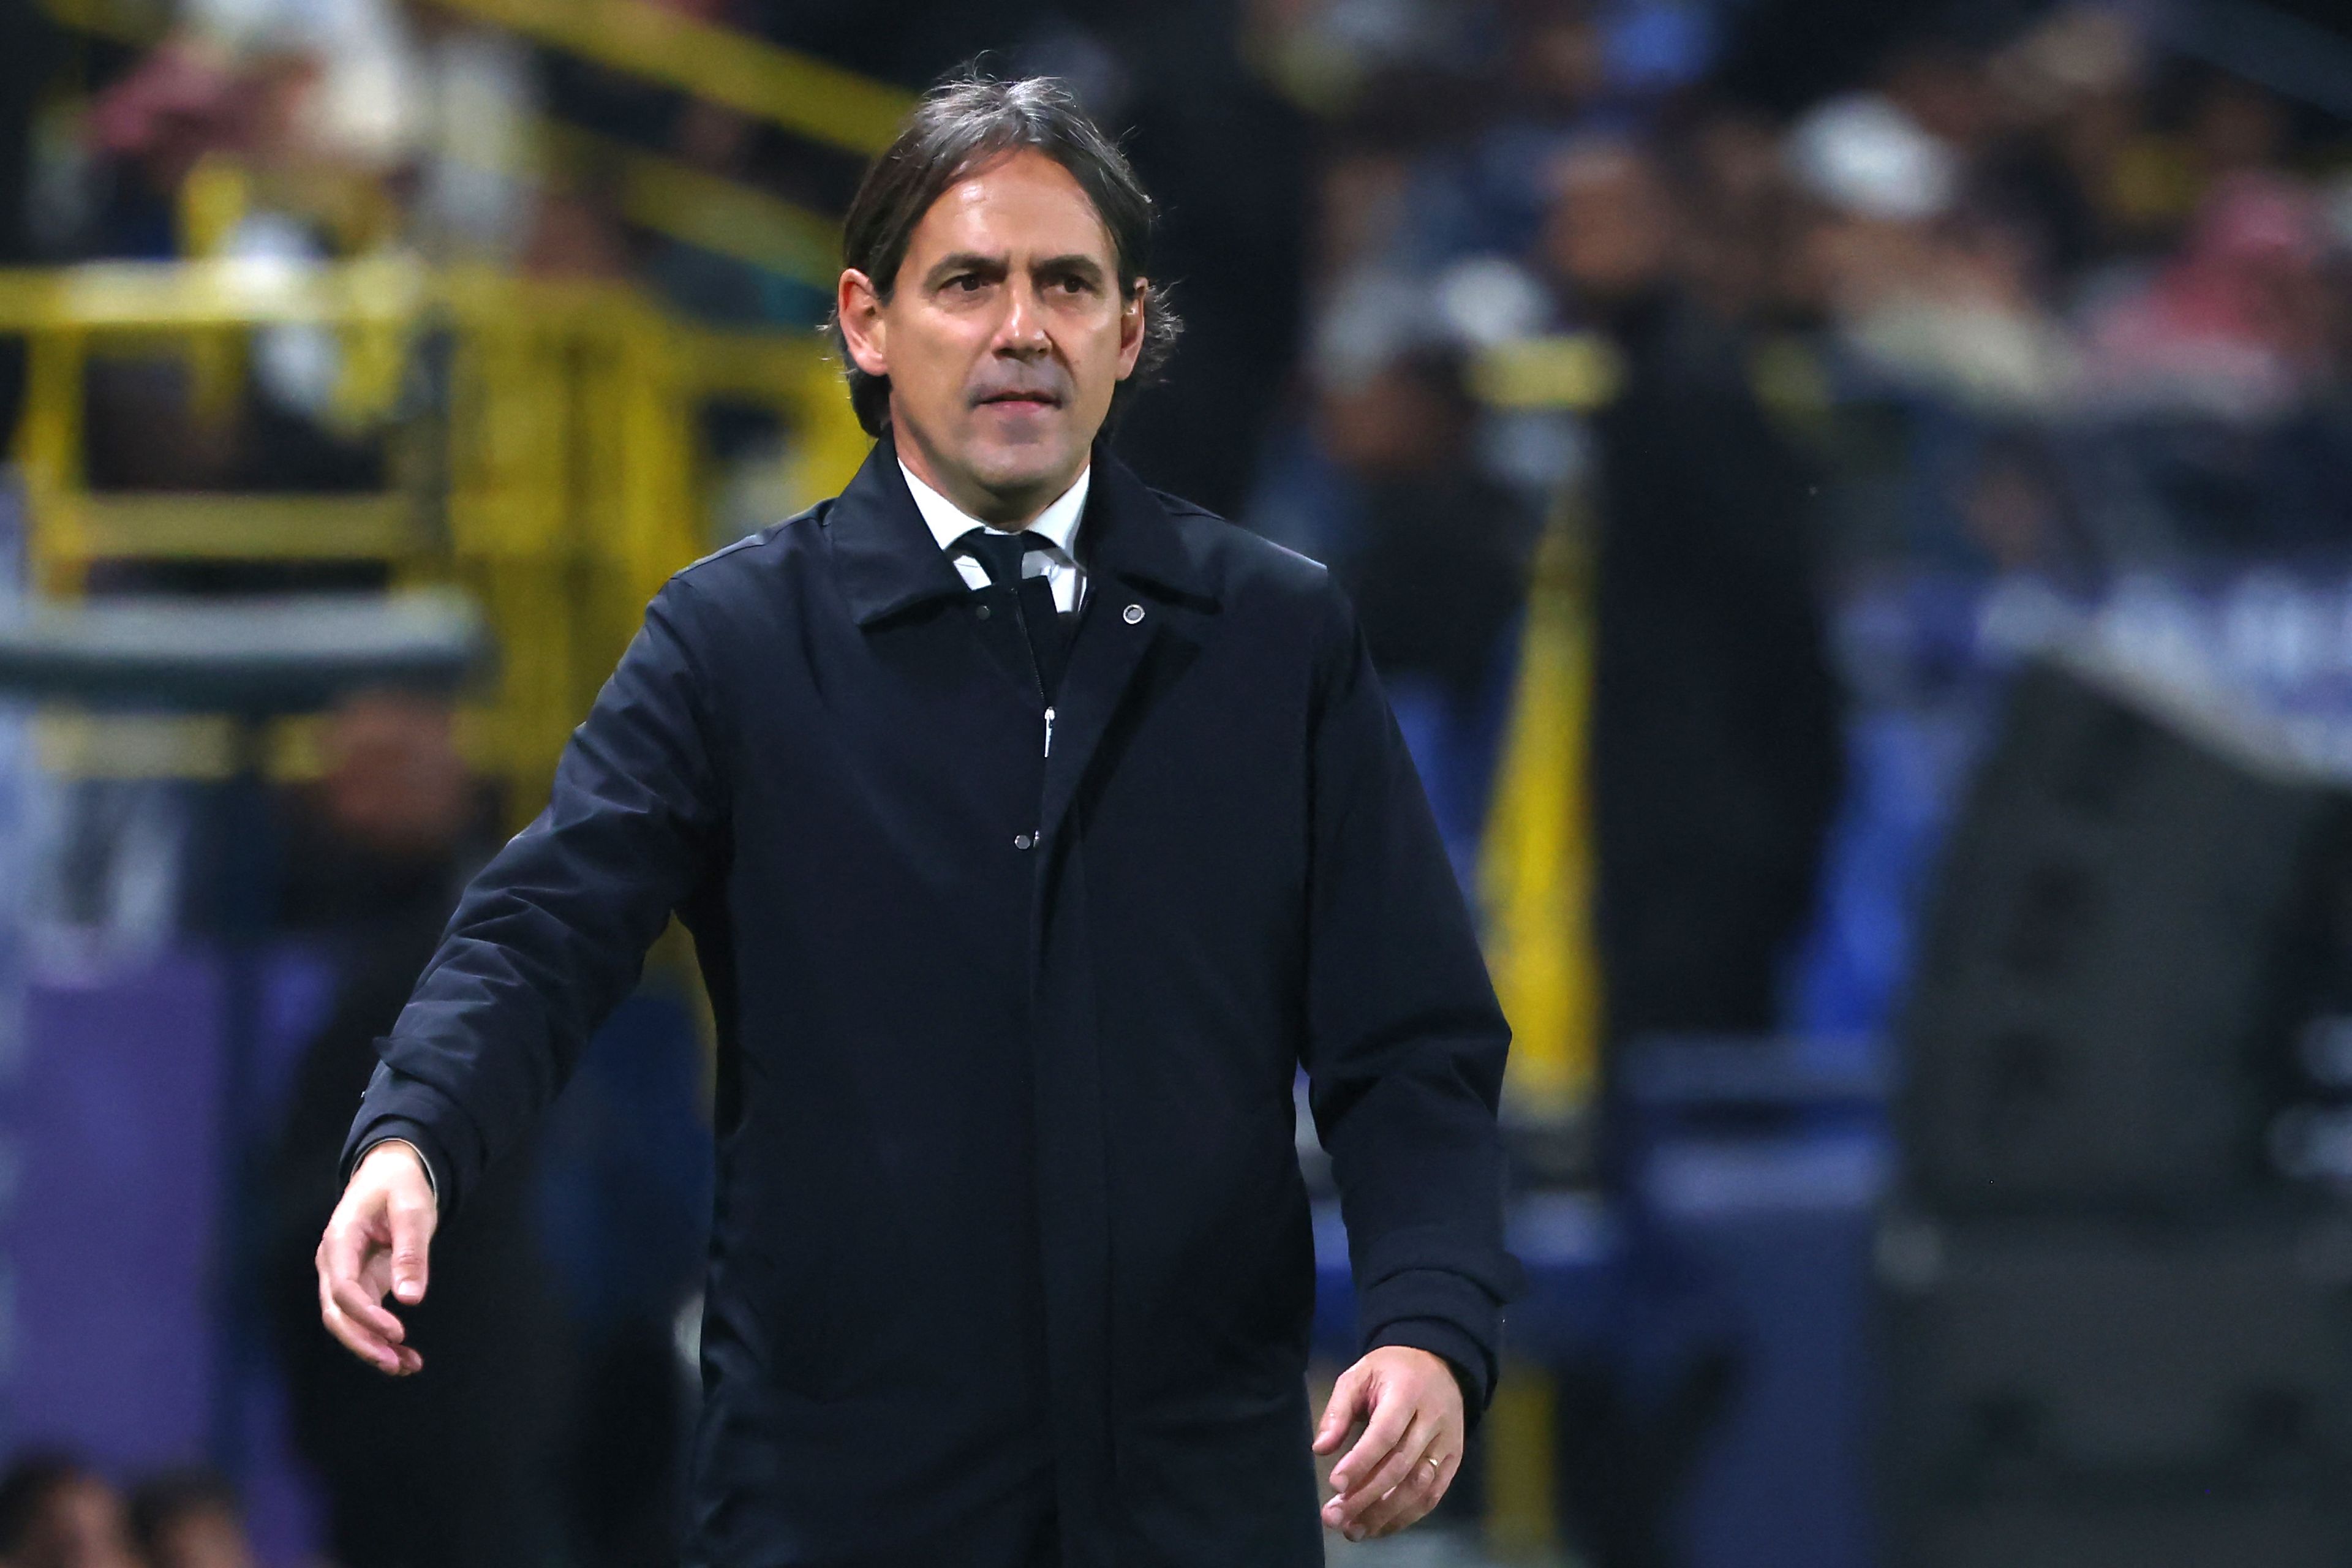 Simone Inzaghi lavishes praise on Kristjan Asllani after goal vs Genoa